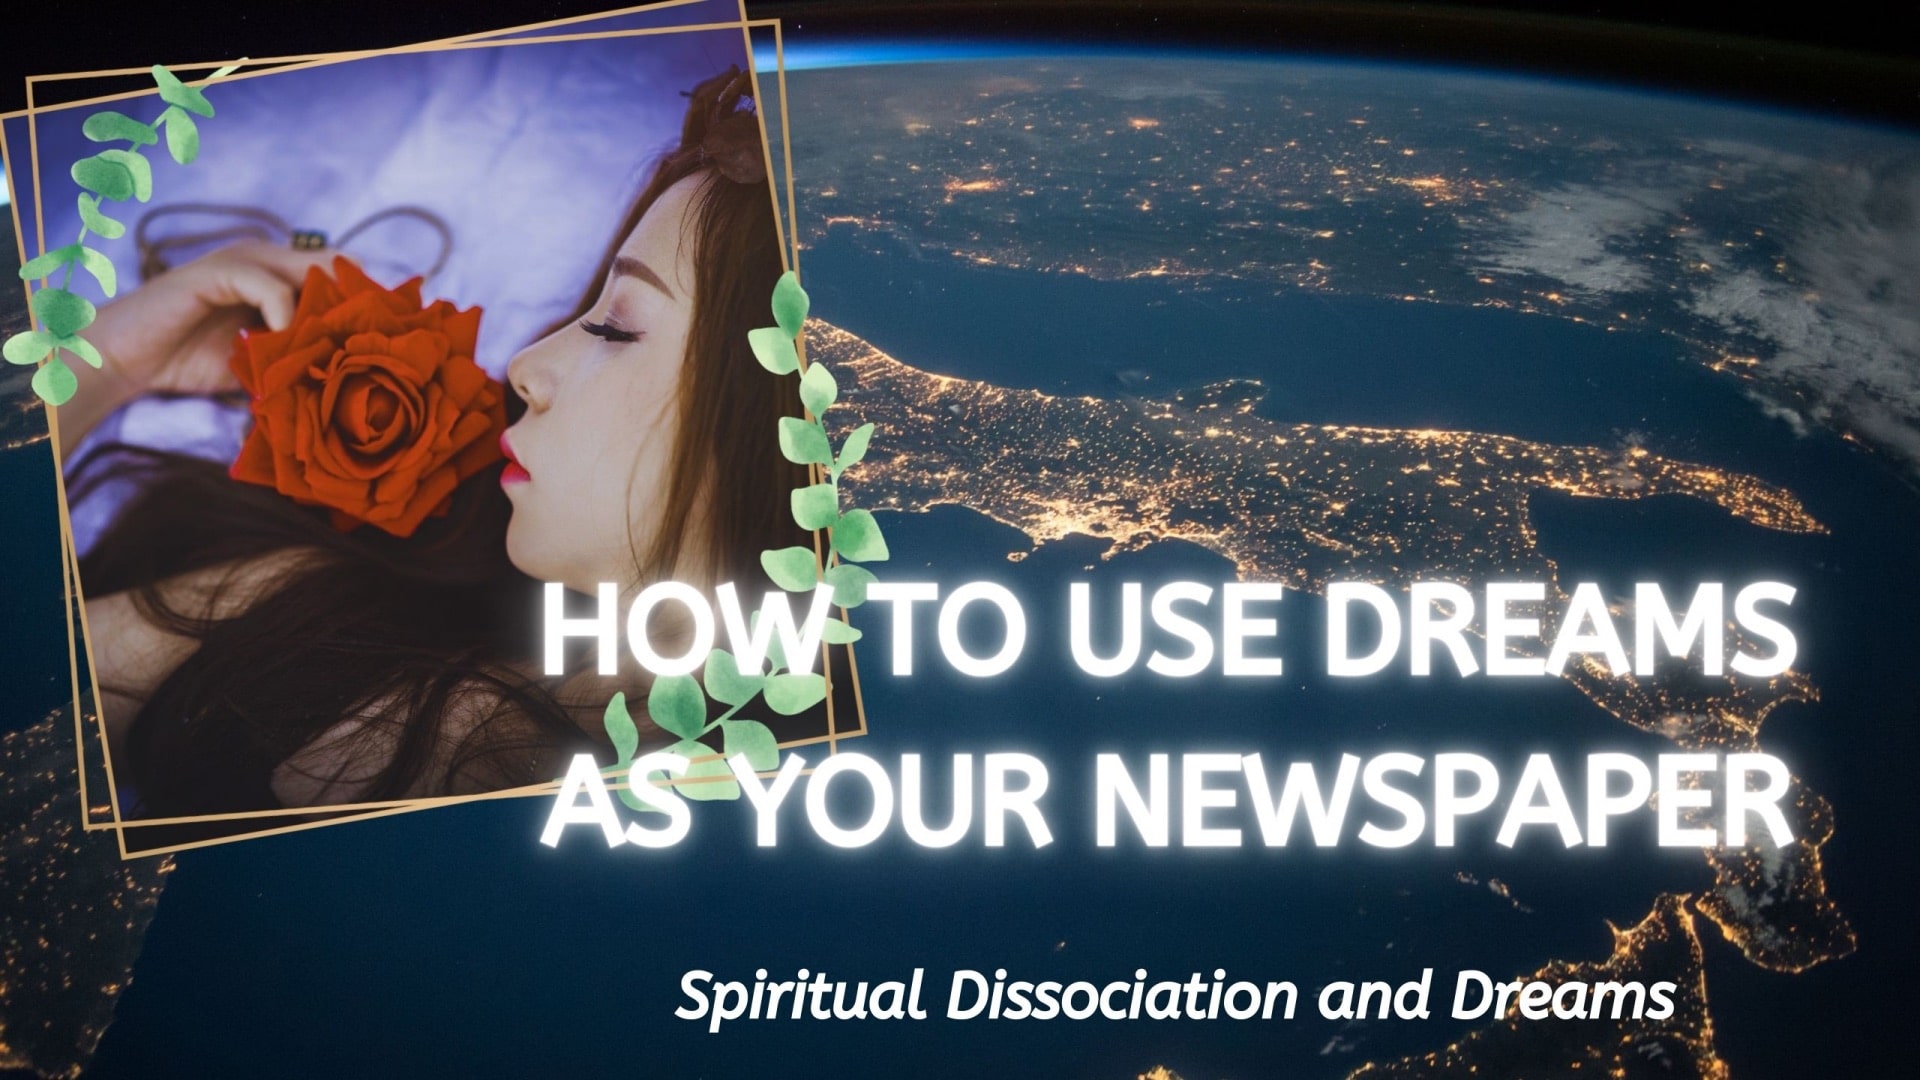 Spiritual Dissociation and Dreams